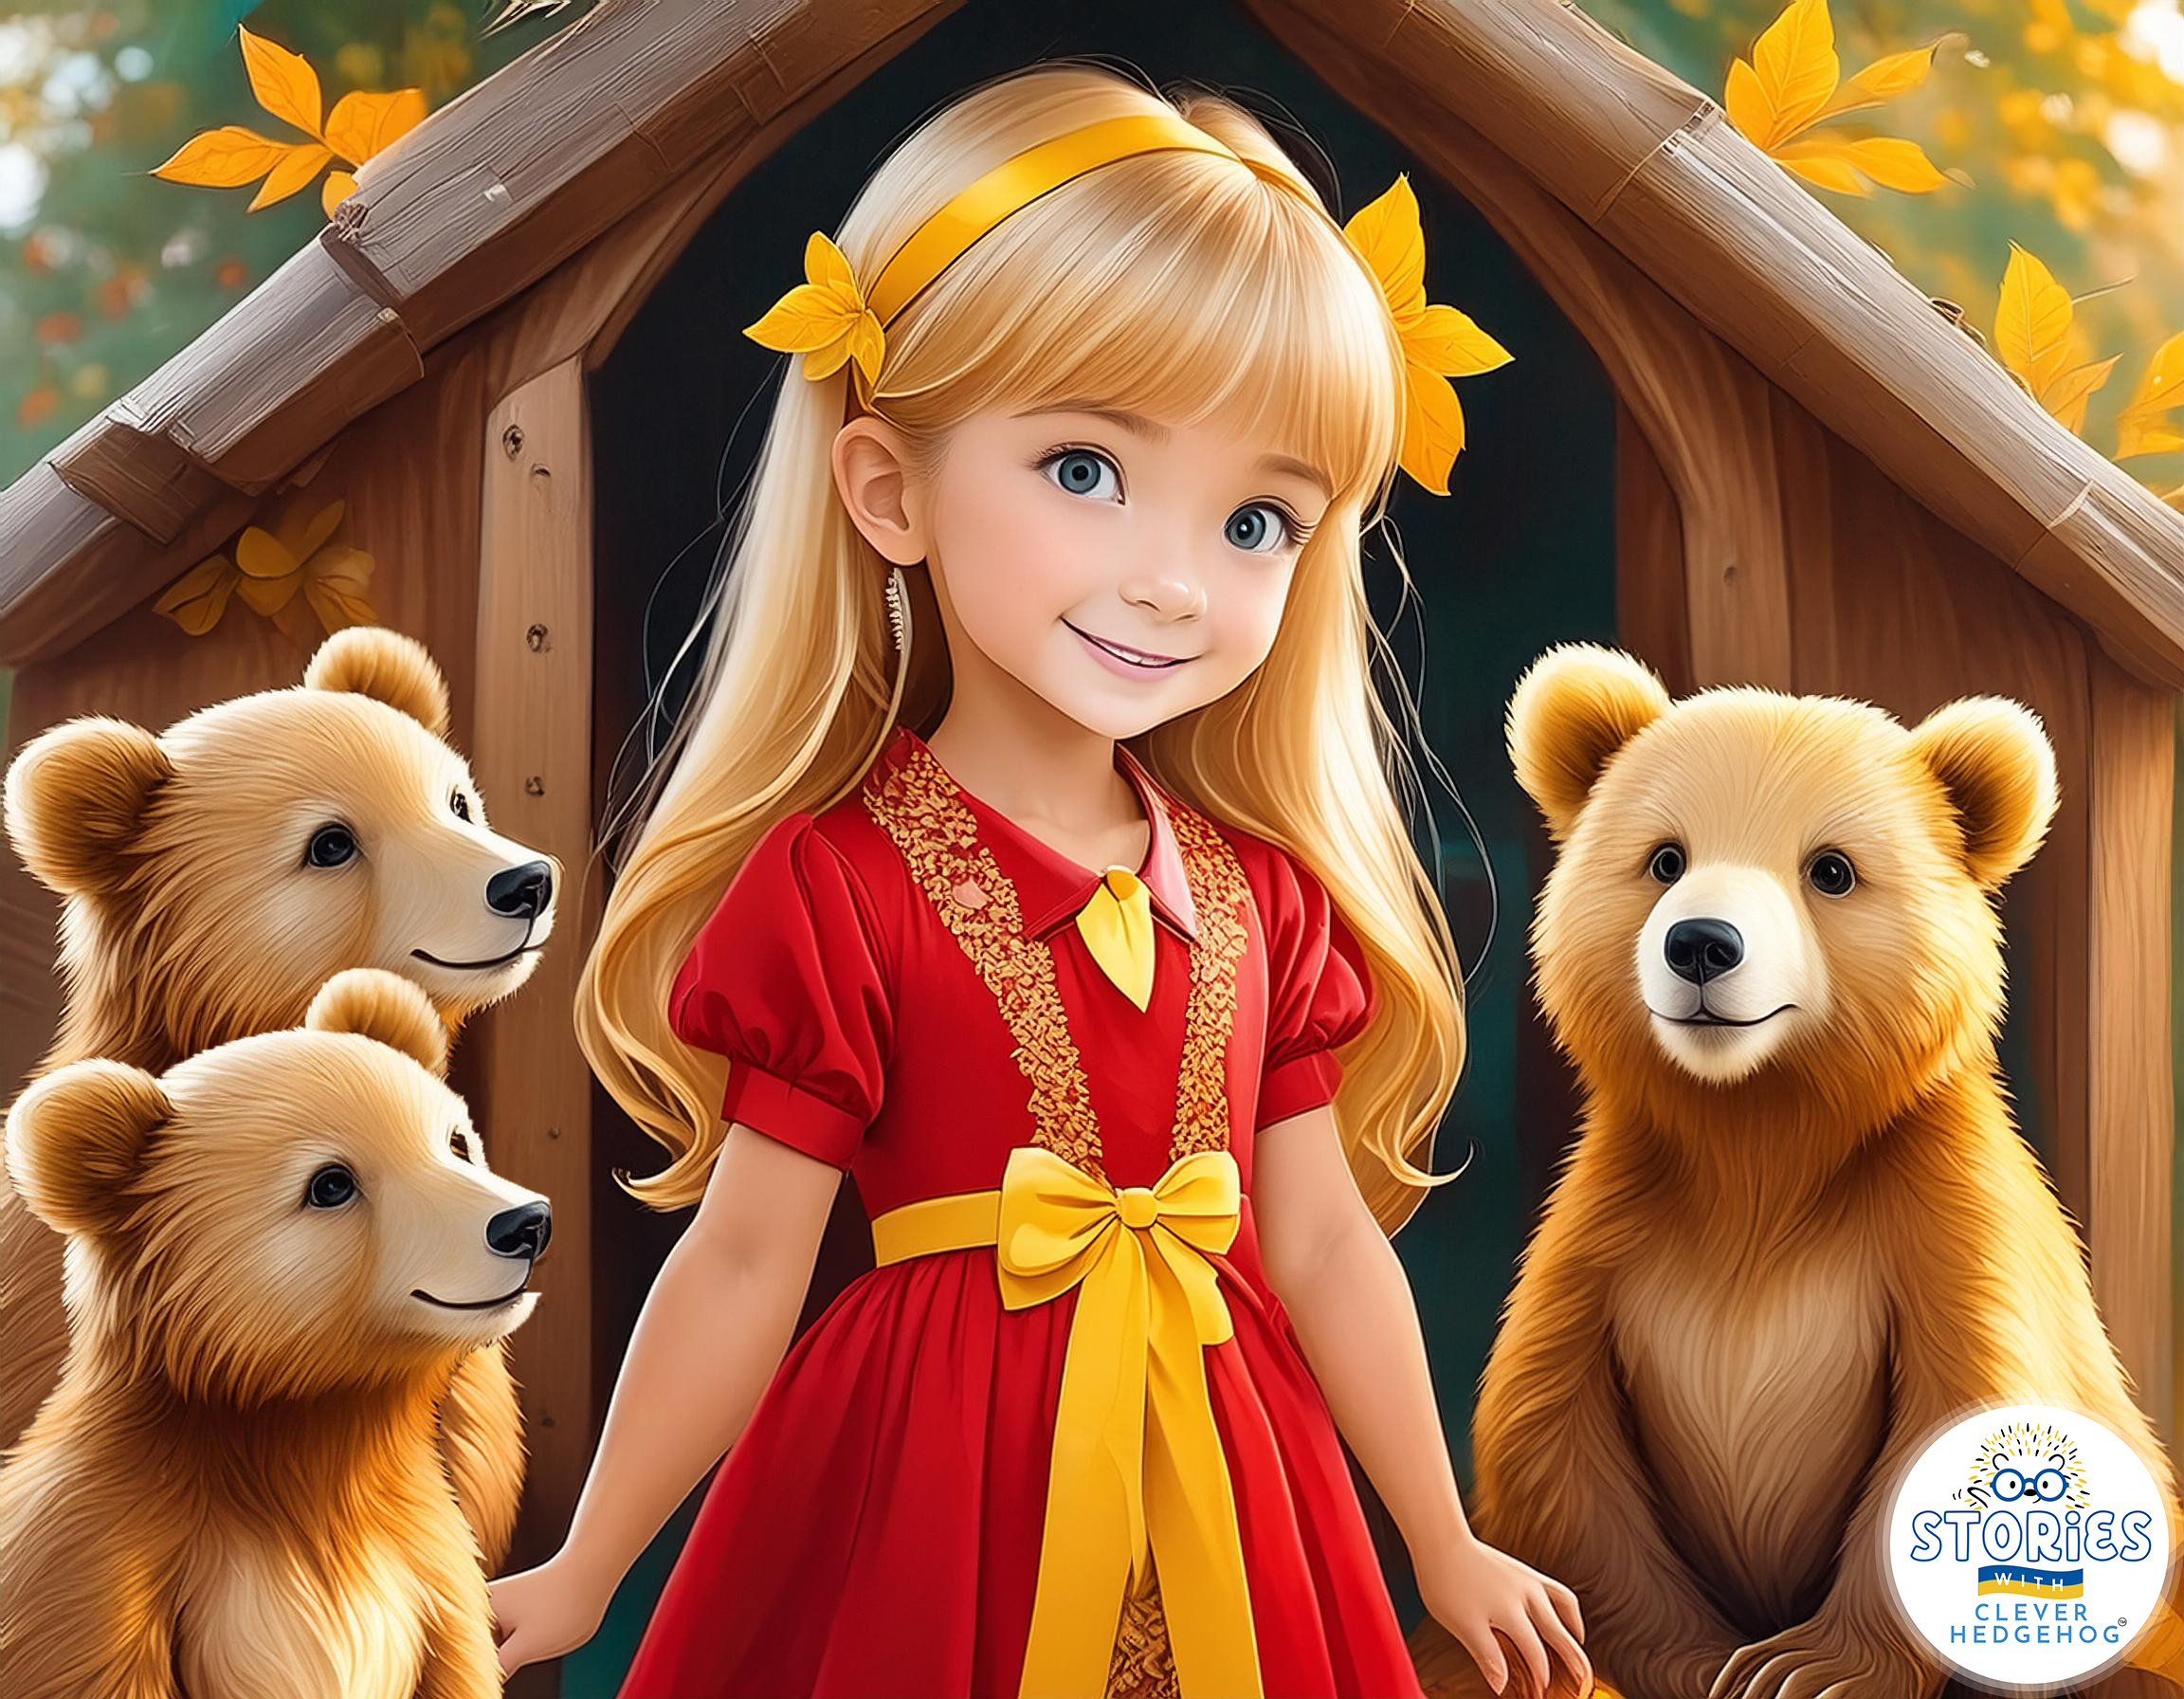 Goldilocks and the Three Bears
